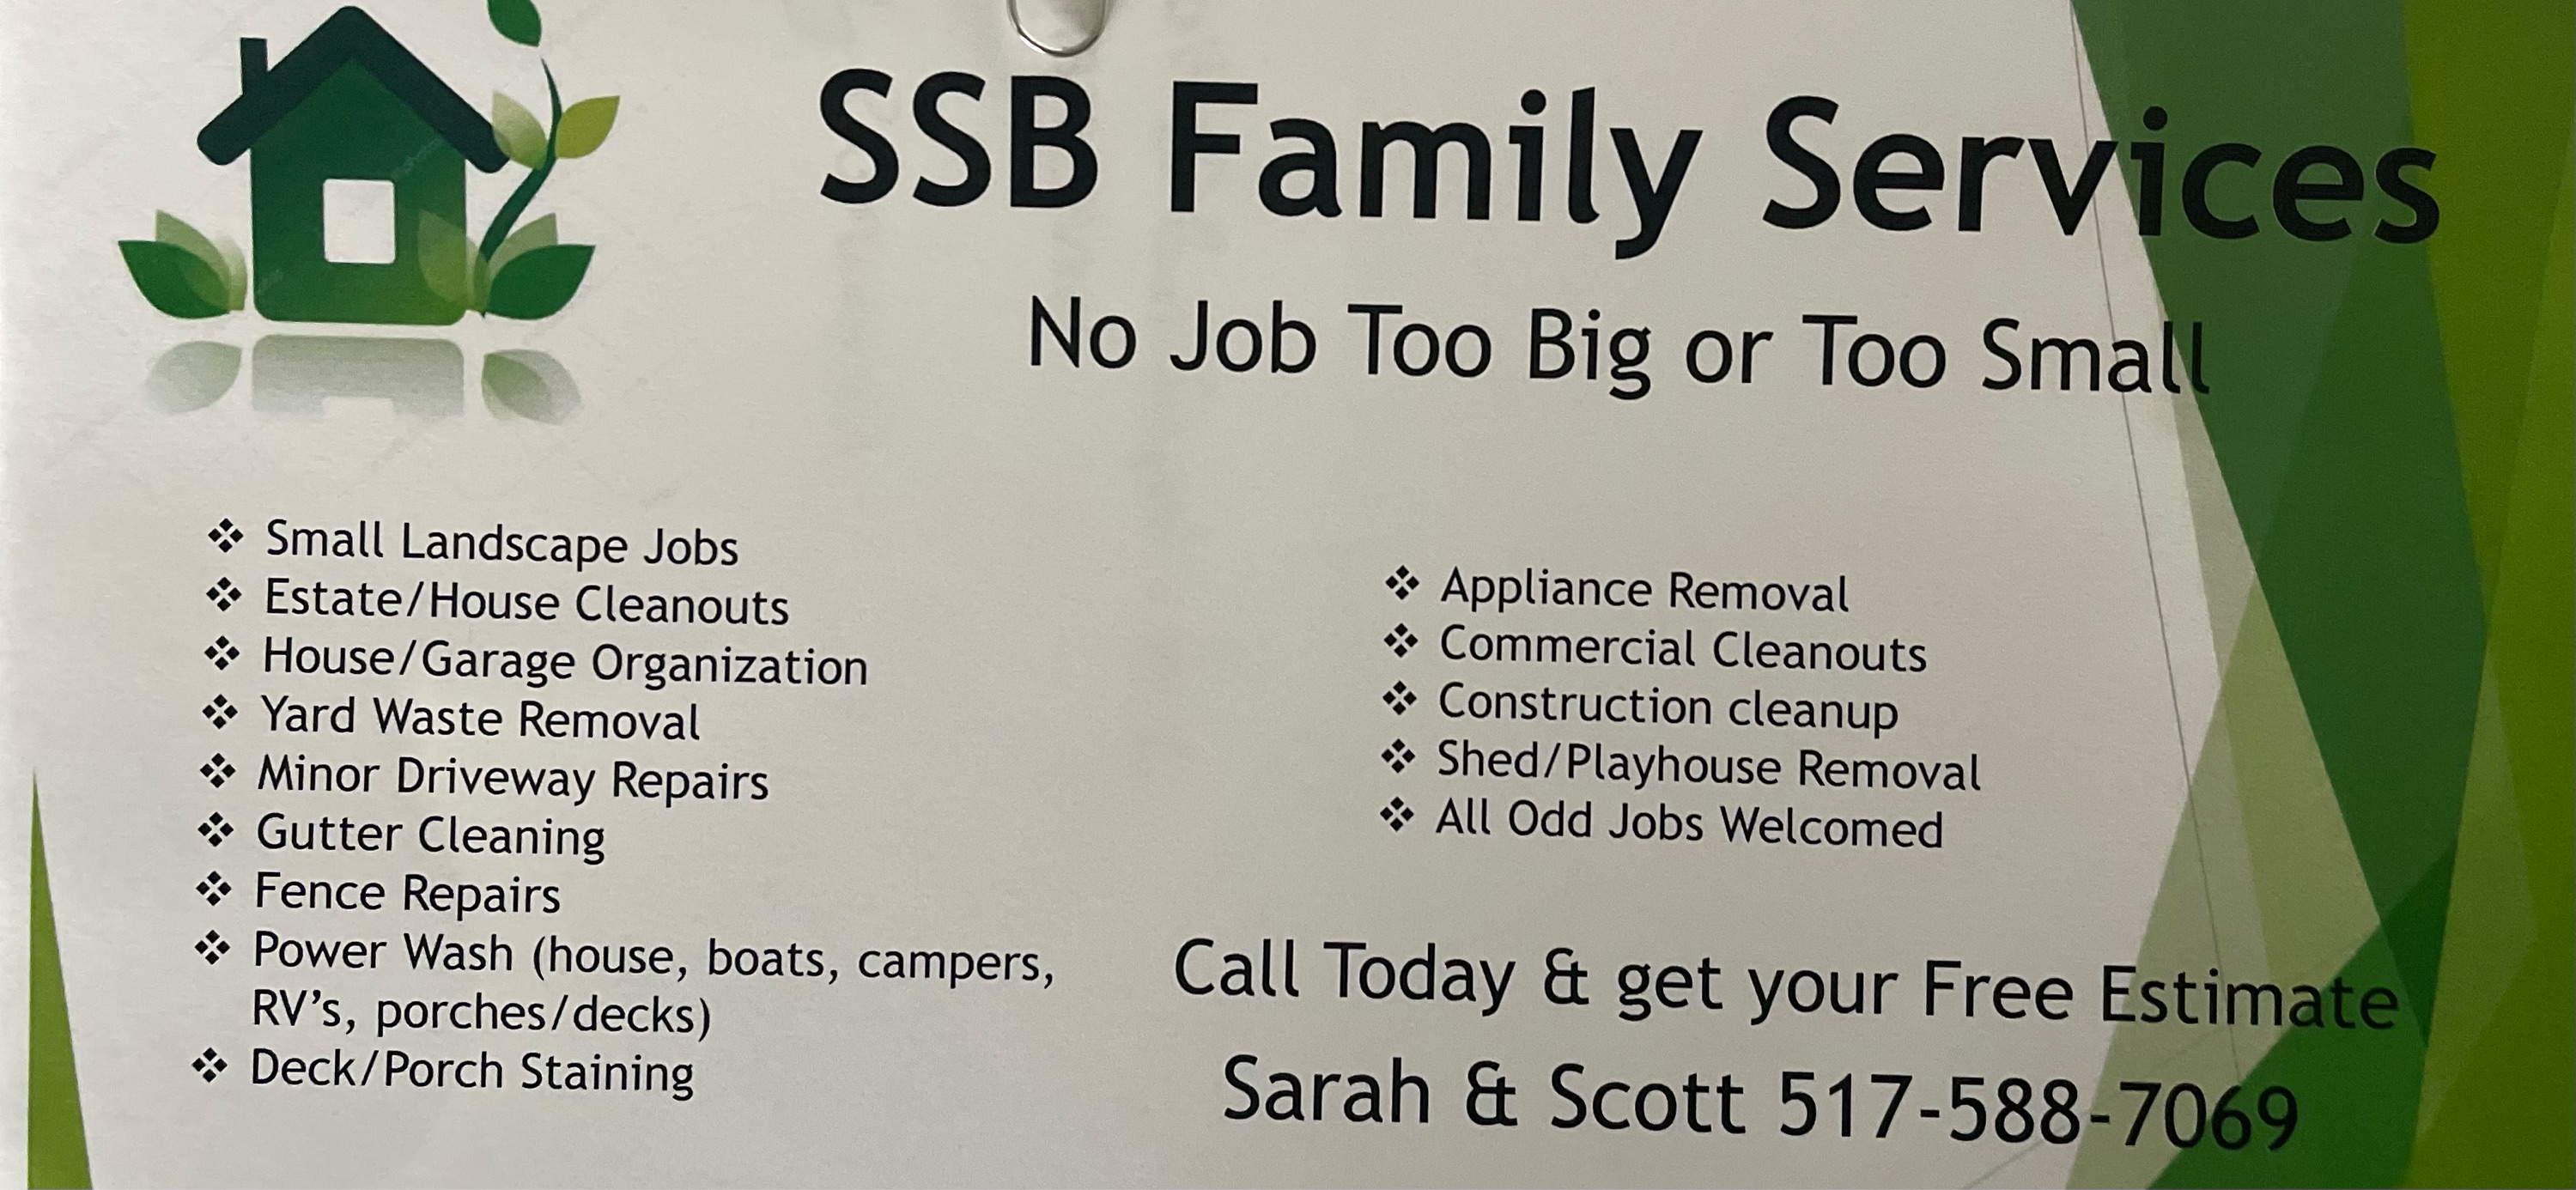 SSB Family Services Logo